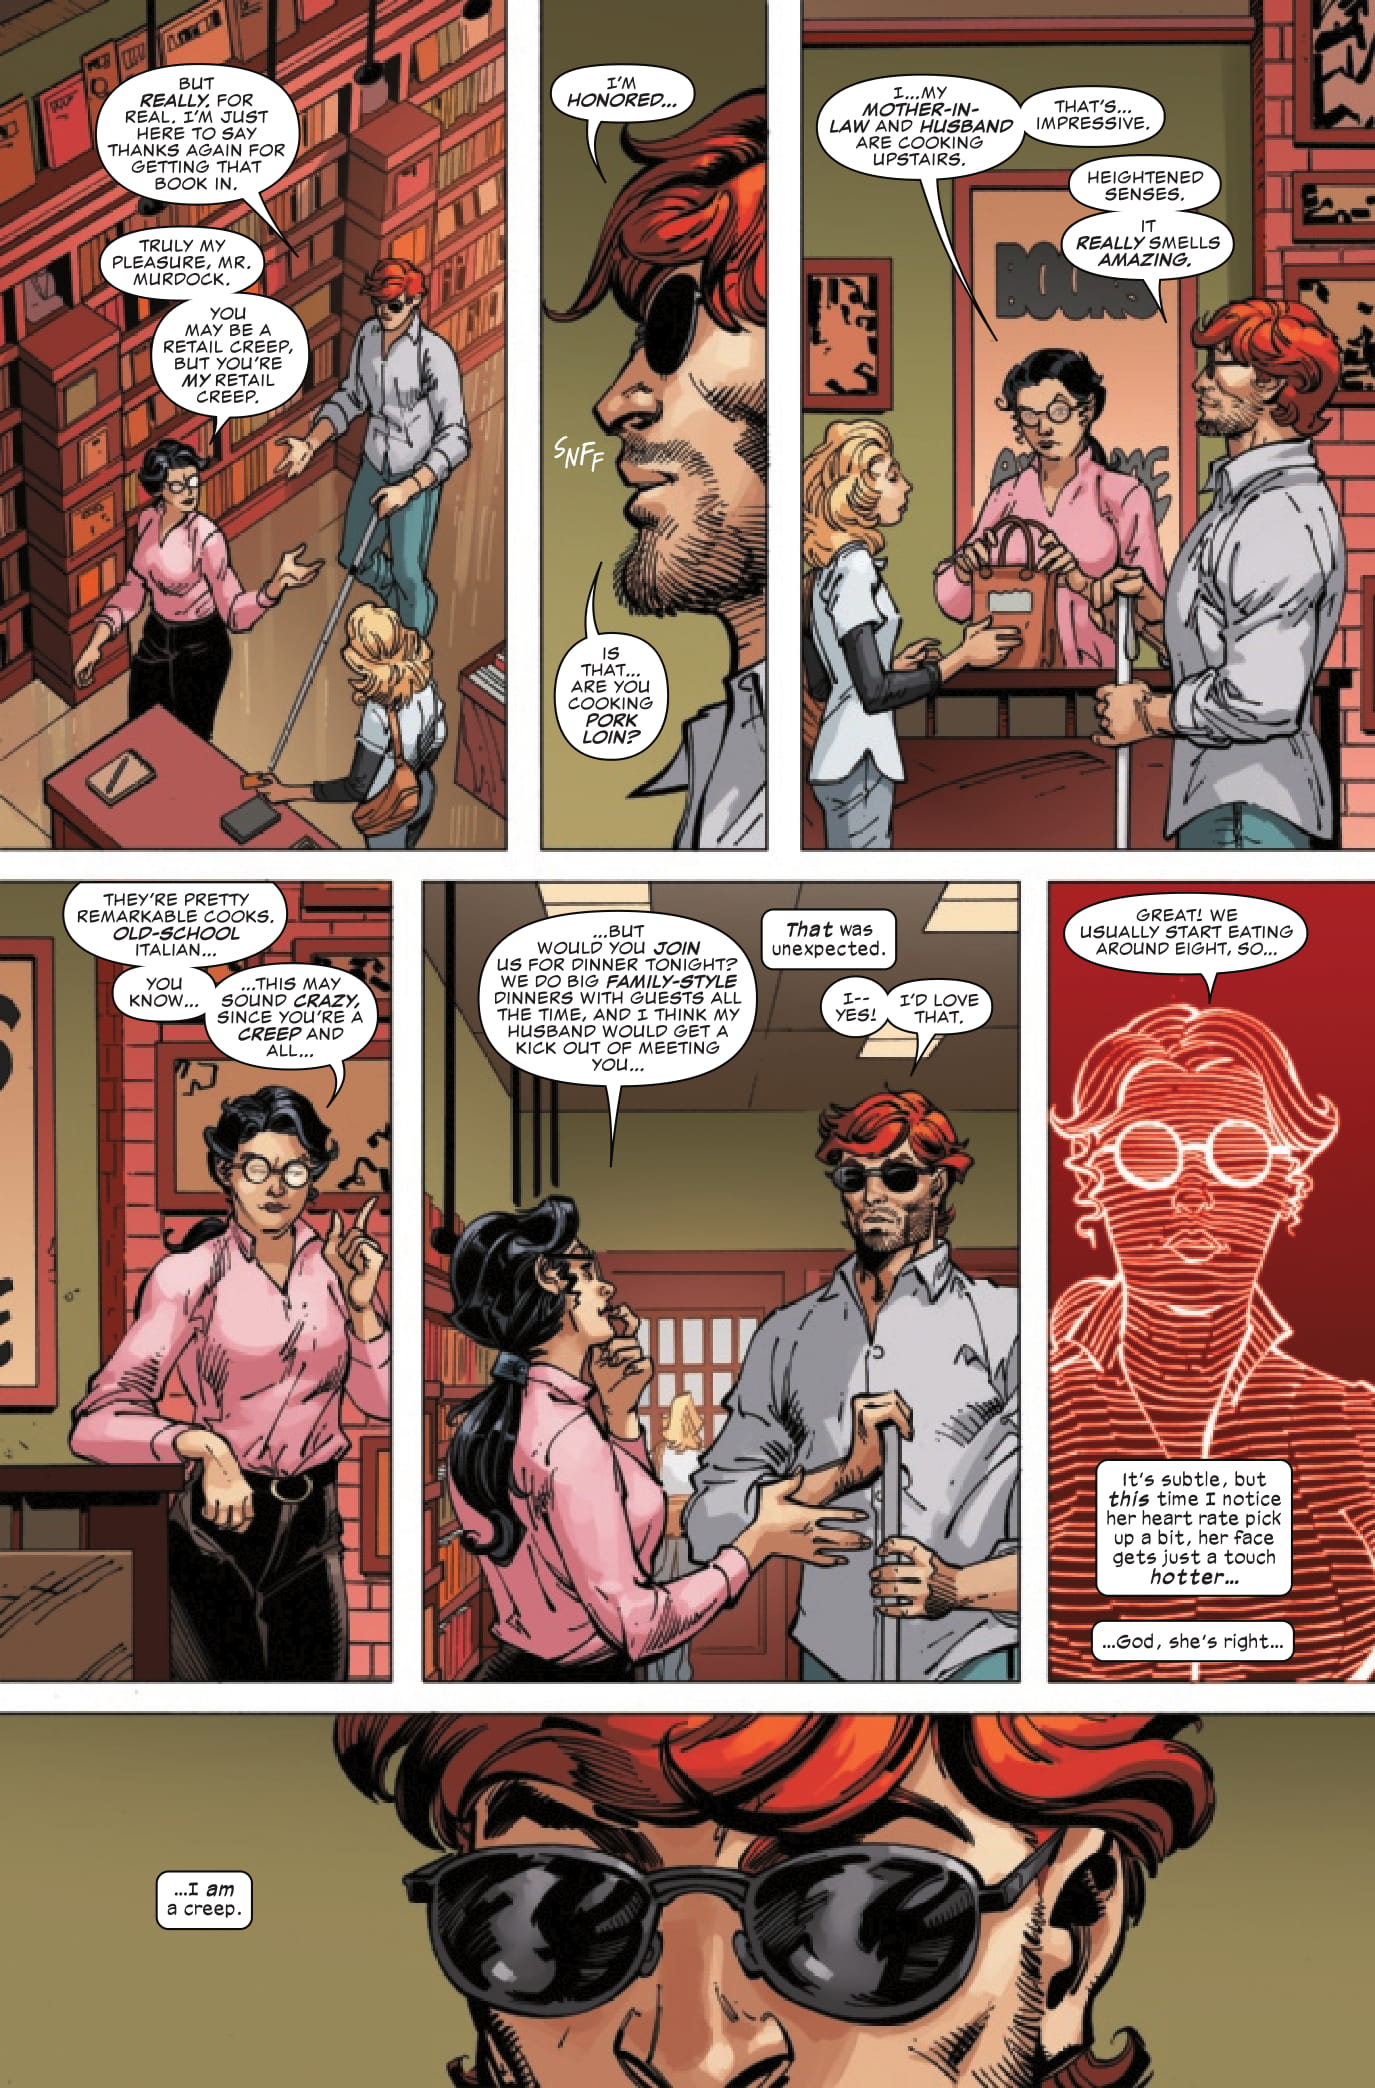 Daredevil #8 preview page 2